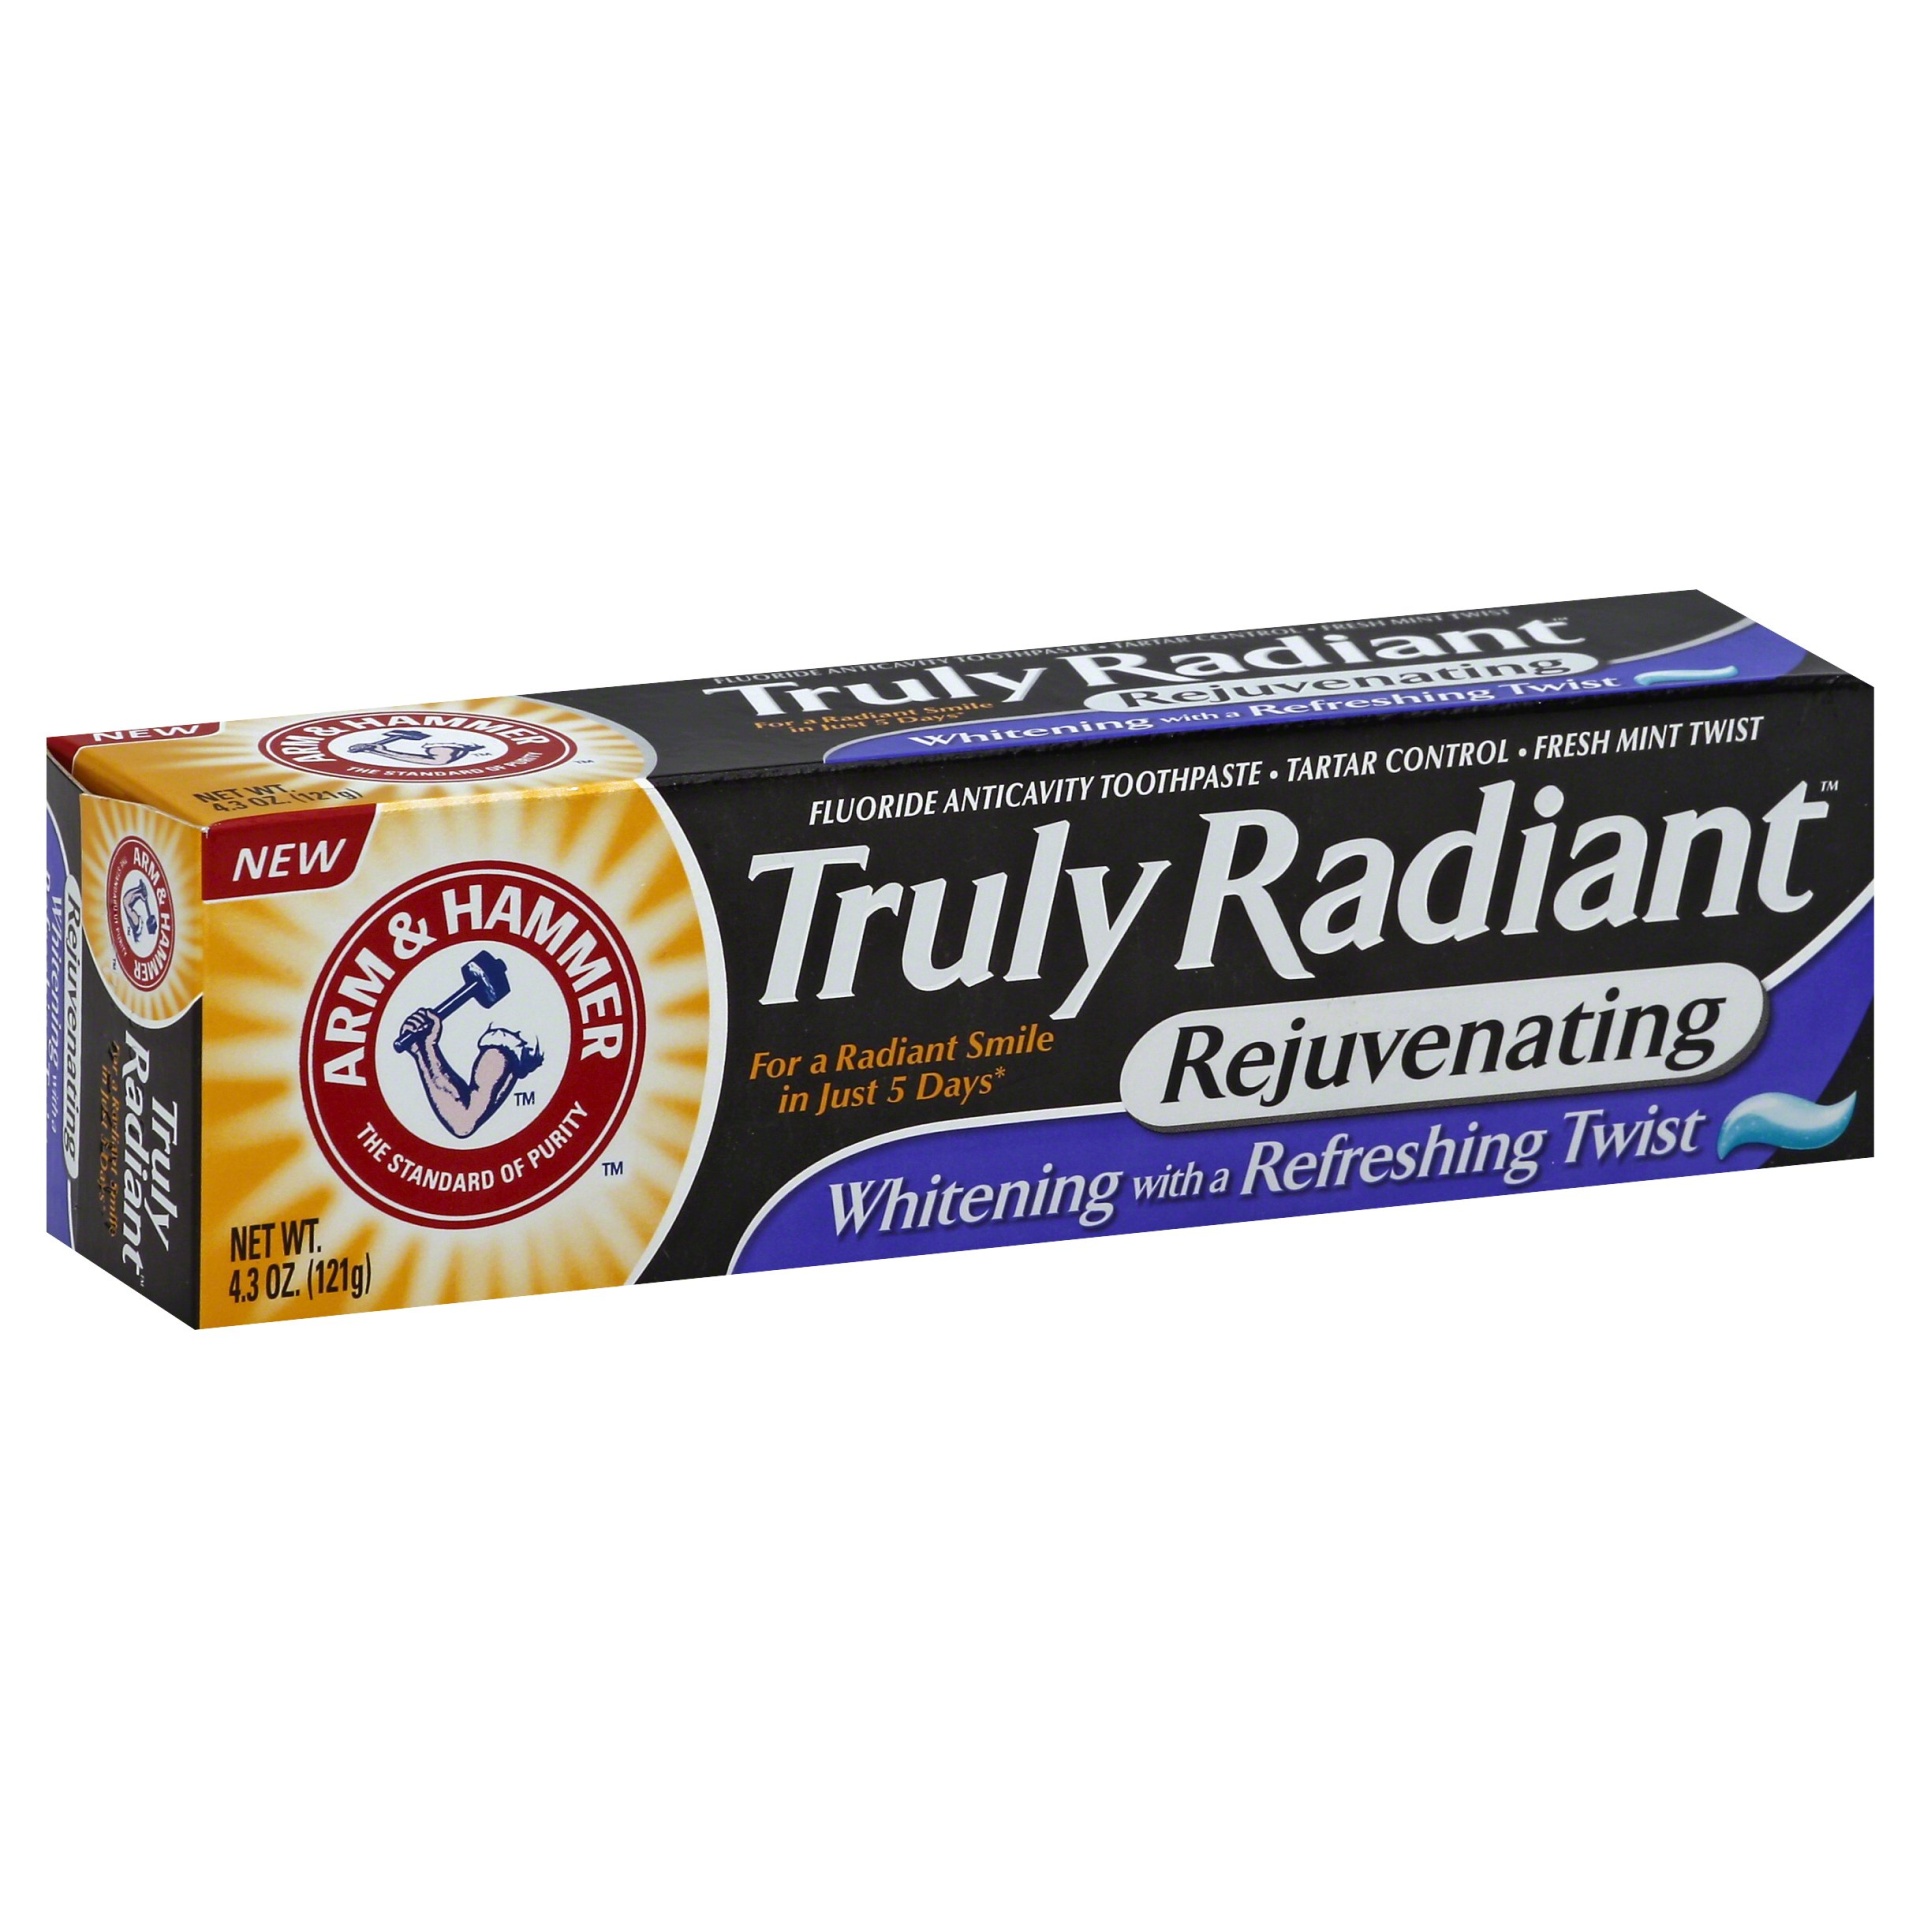 slide 1 of 4, ARM & HAMMER Truly Radiant Rejuvenating Fresh Mint Twist Fluoride Anticavity Toothpaste, 4.3 oz